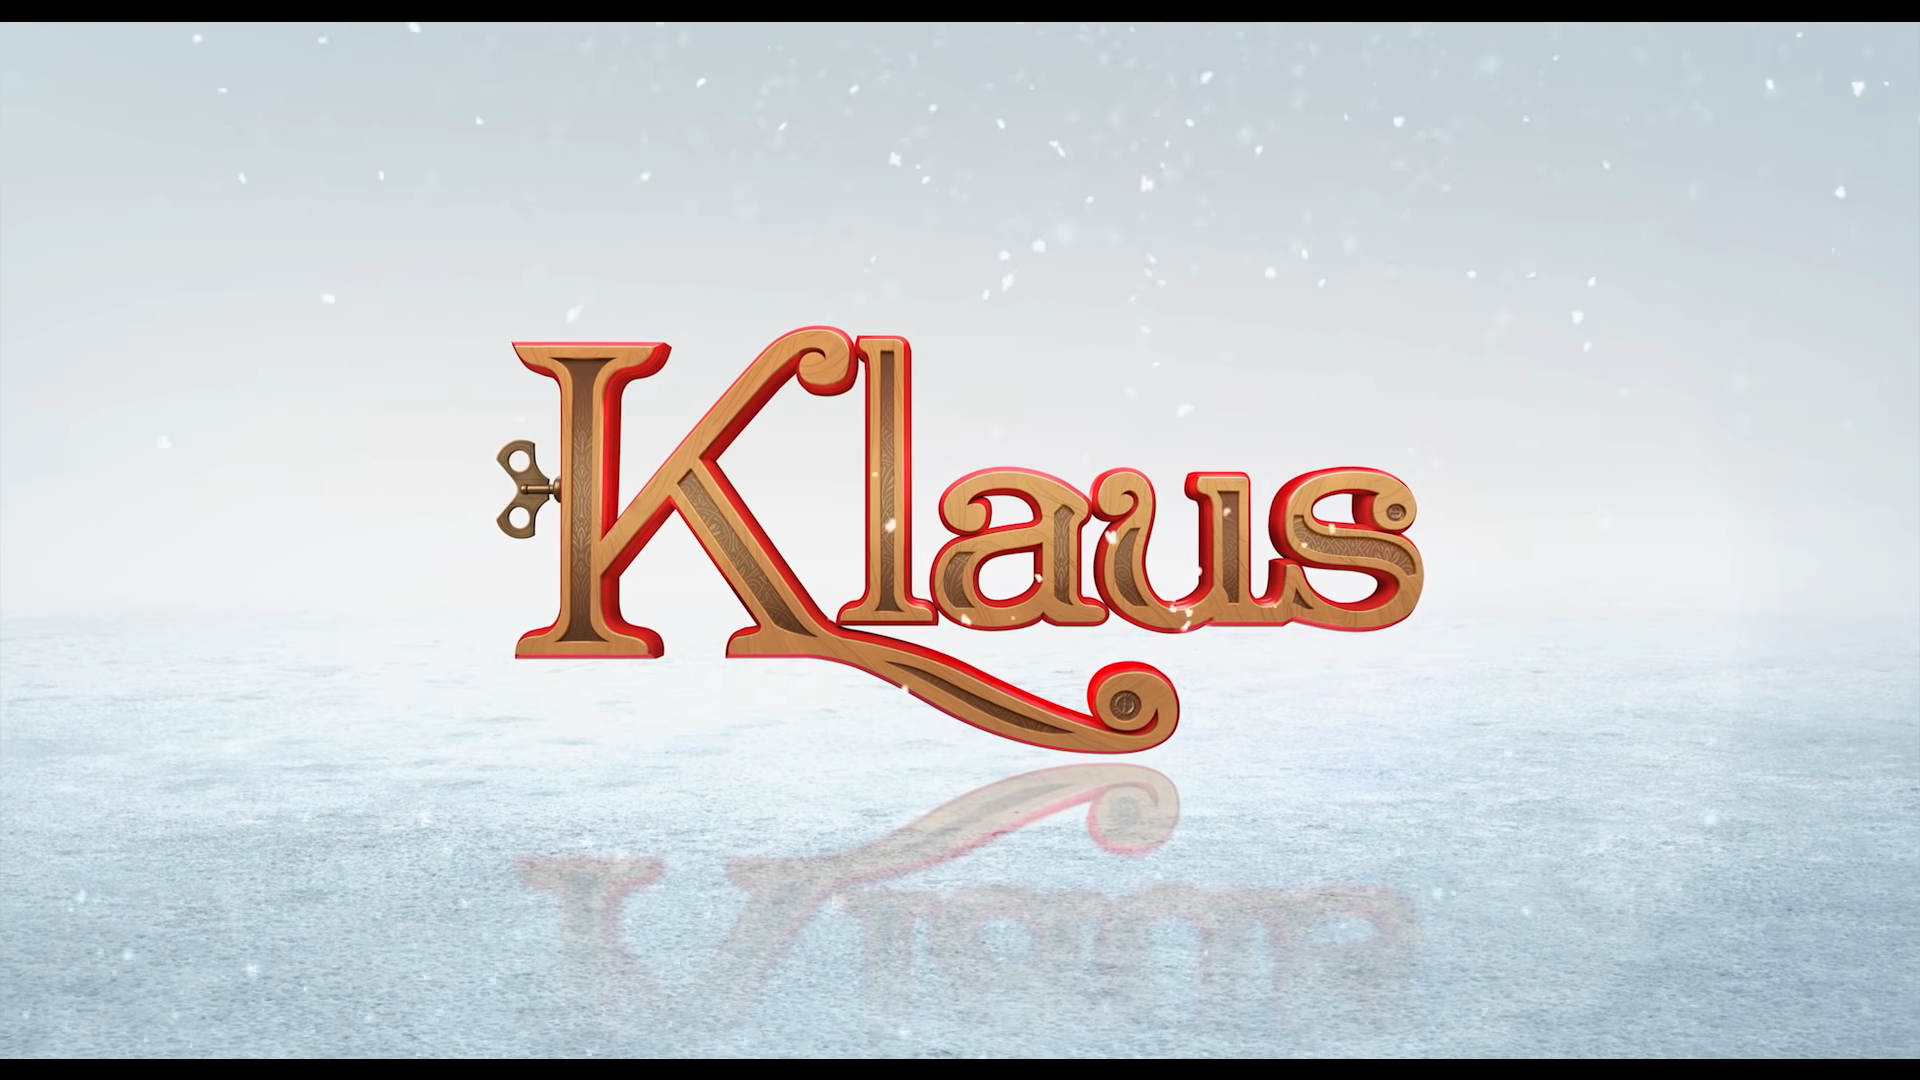 Klaus Netflix Trailer, Netflix Animation Movies, Netflix Christmas Movies, Netflix Holiday Movies, Netflix Comedy Movies